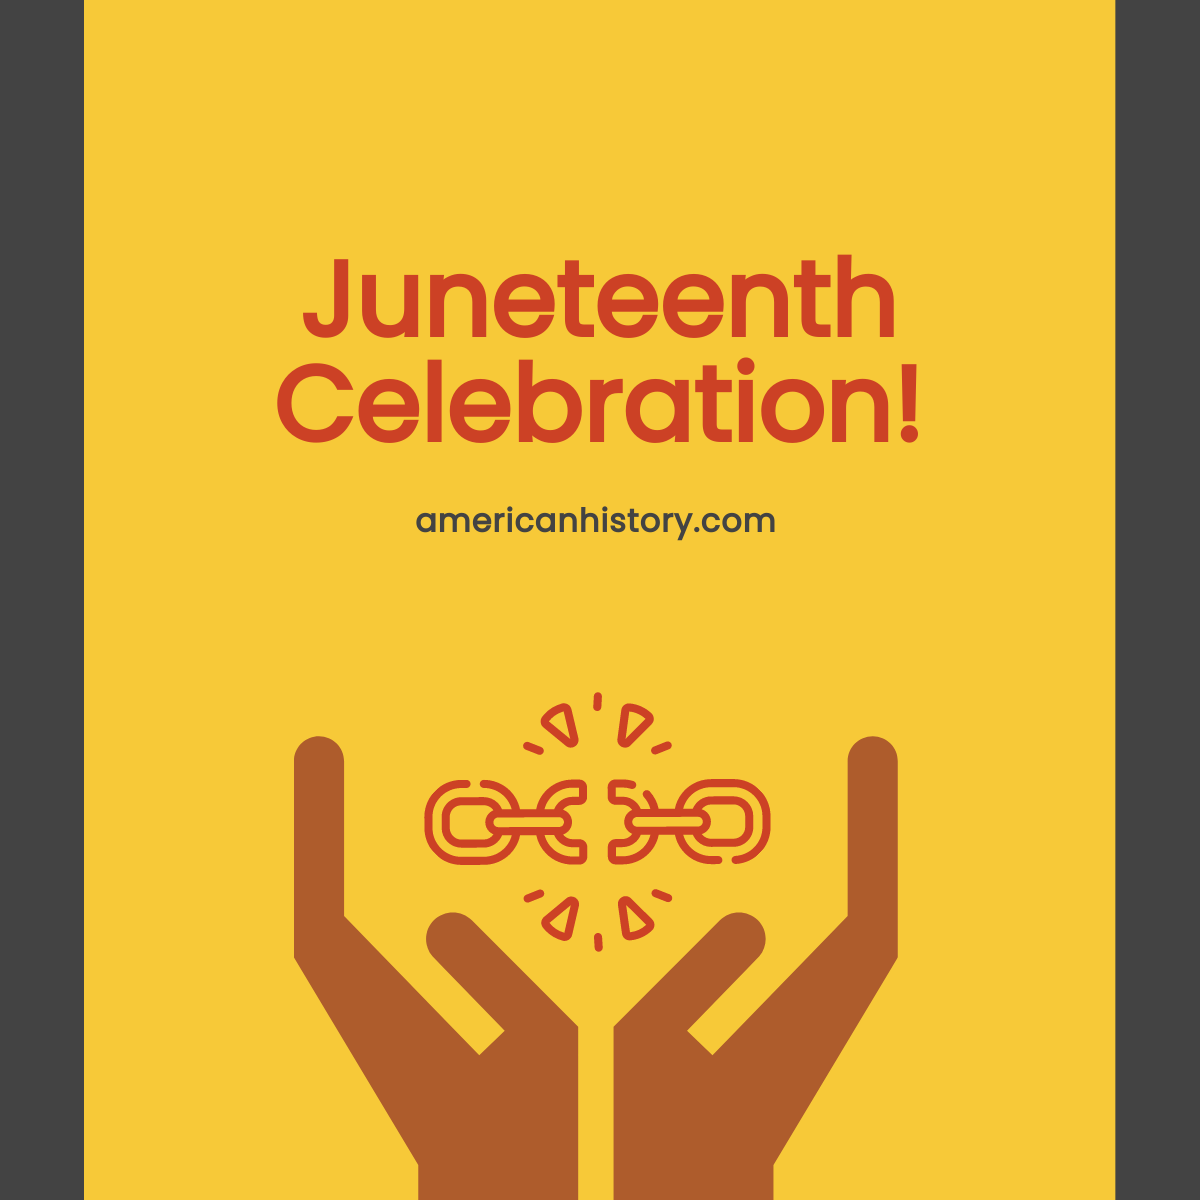 Juneteenth Celebration Linkedin Post